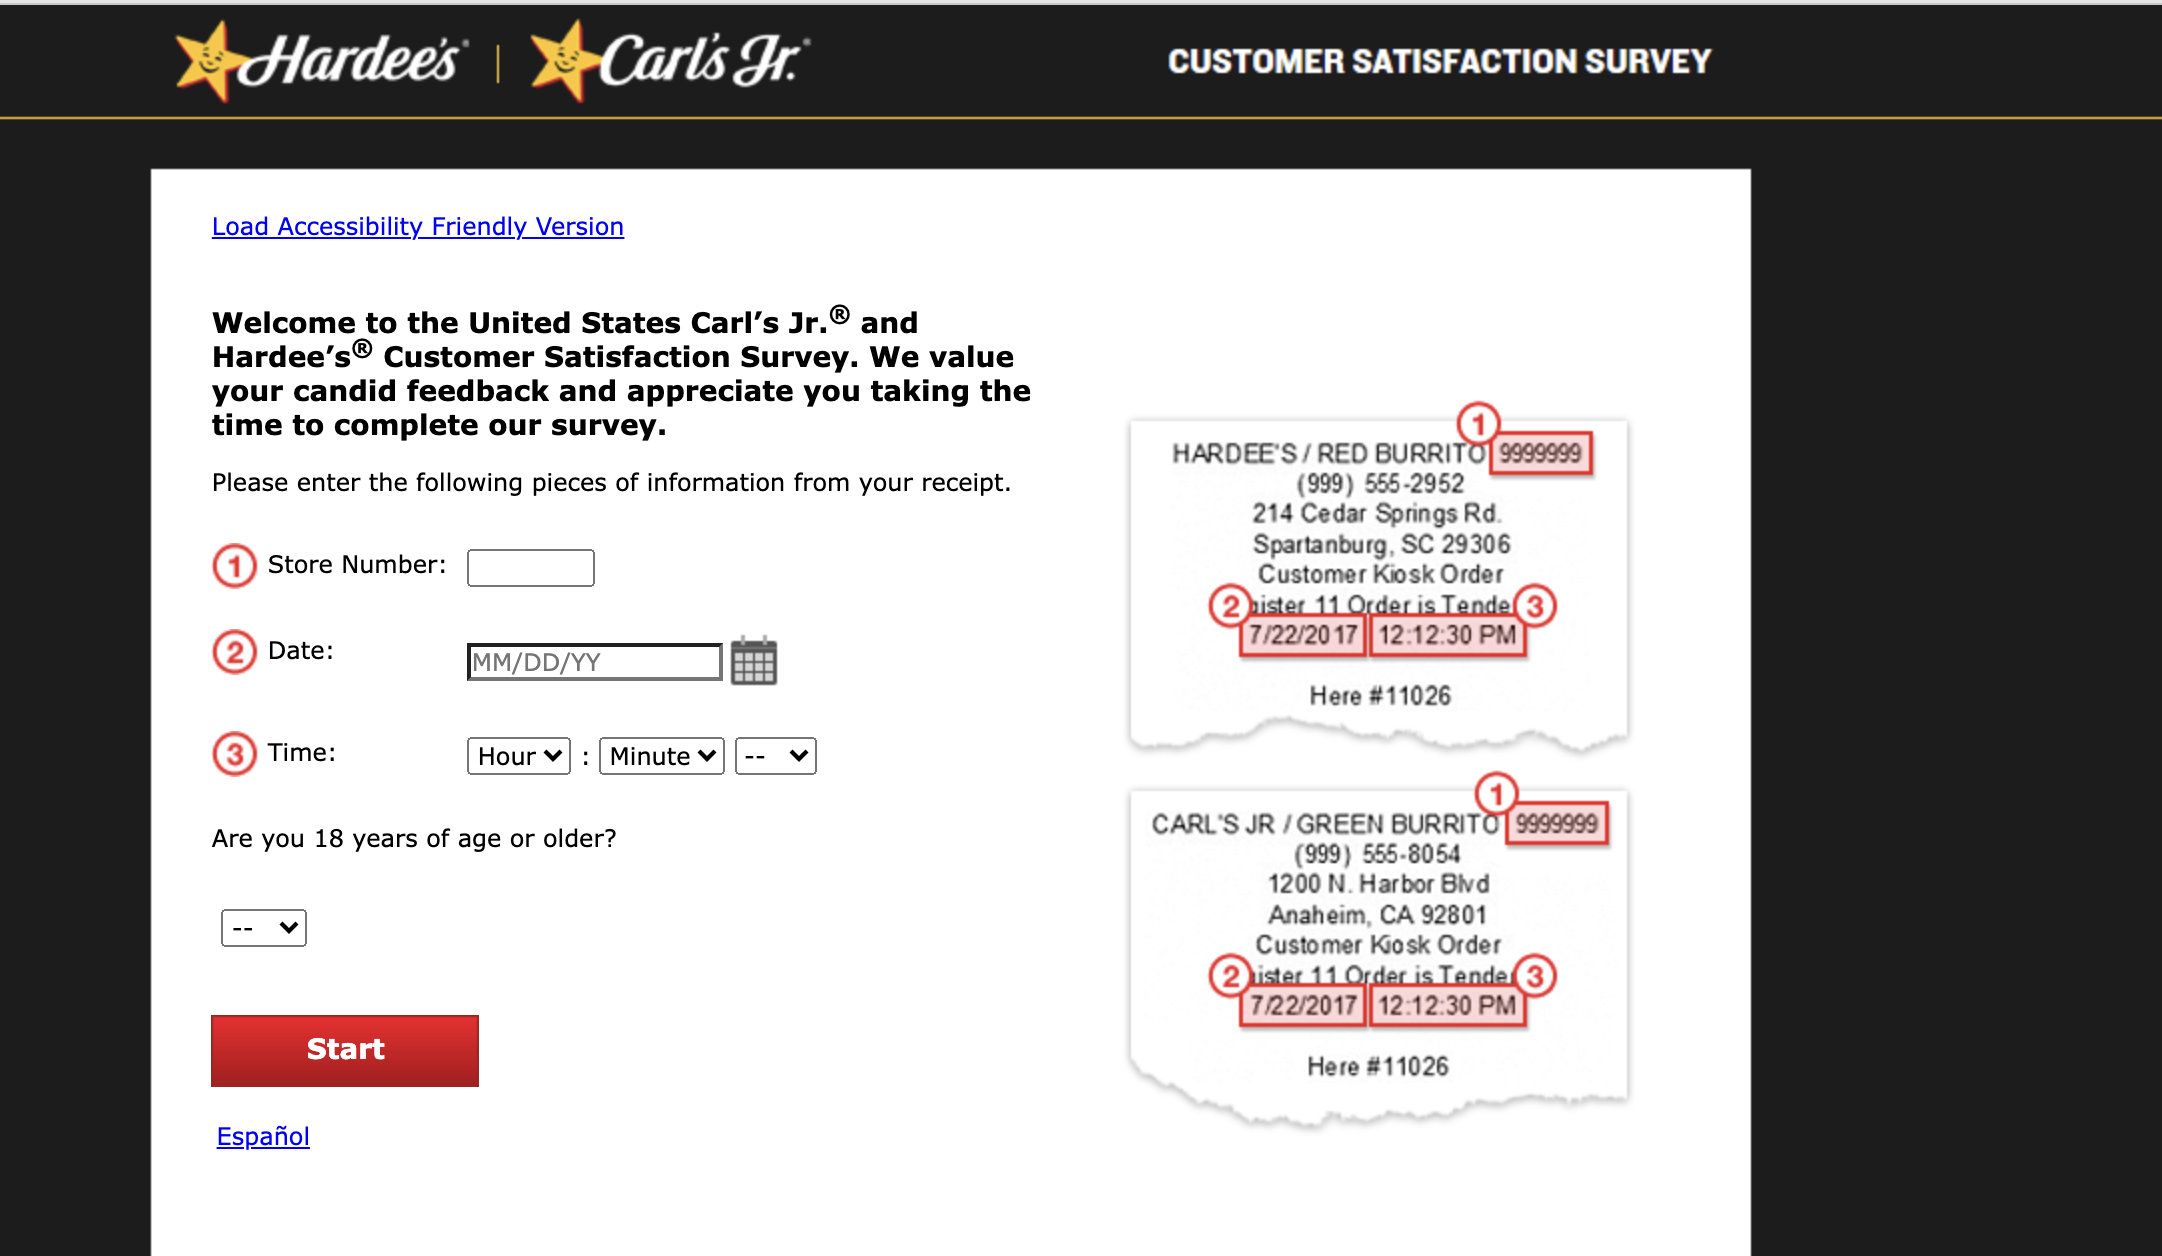 TellHappyStar — Official Hardee’s® Carl’s Jr.® Customer Survey